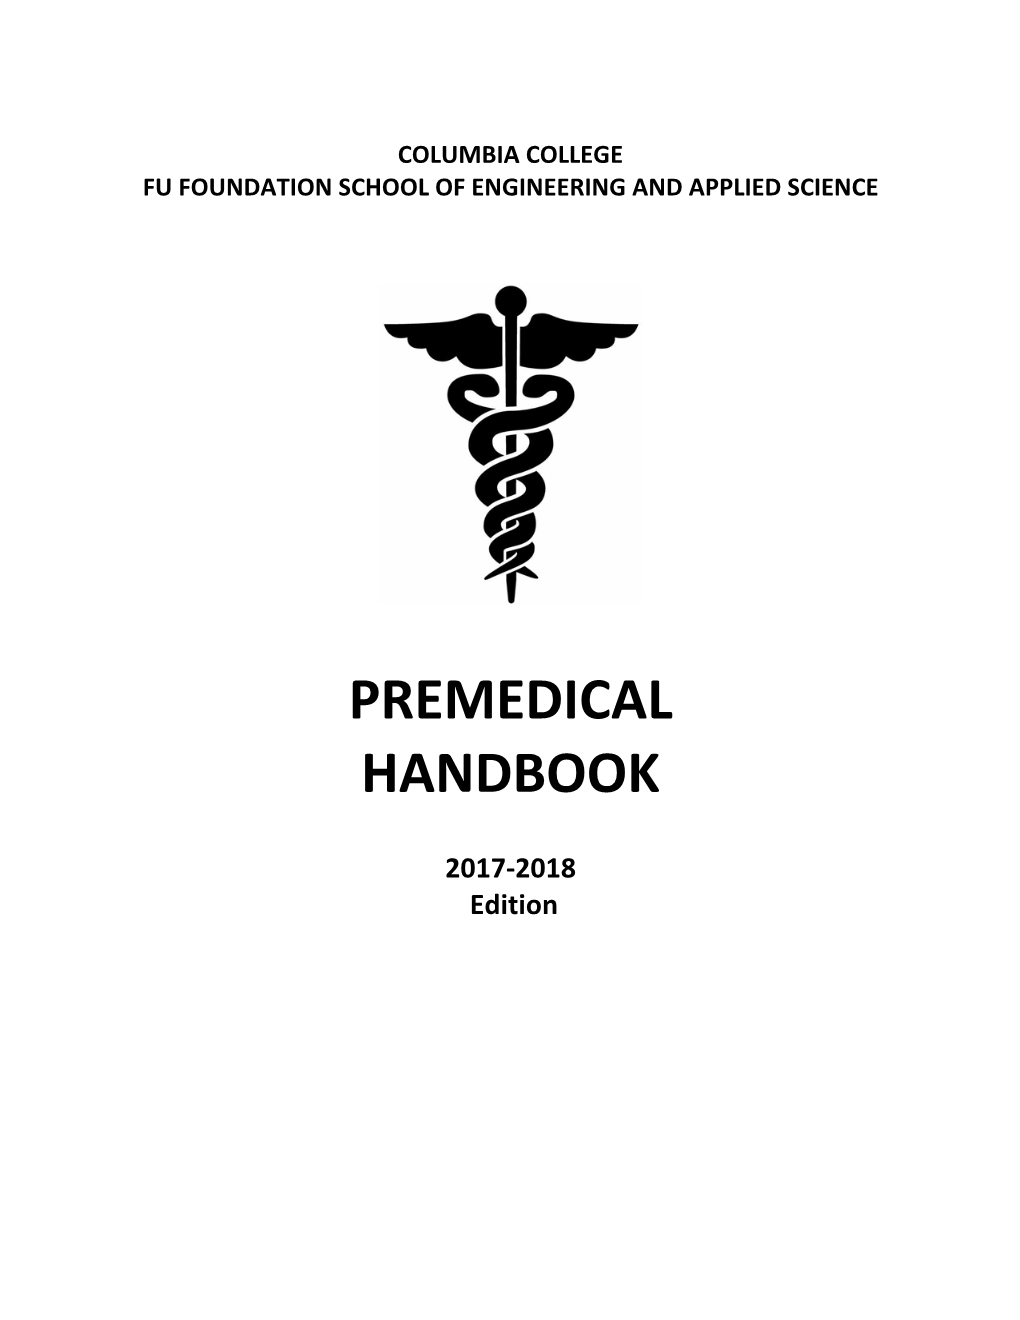 Premedical Handbook